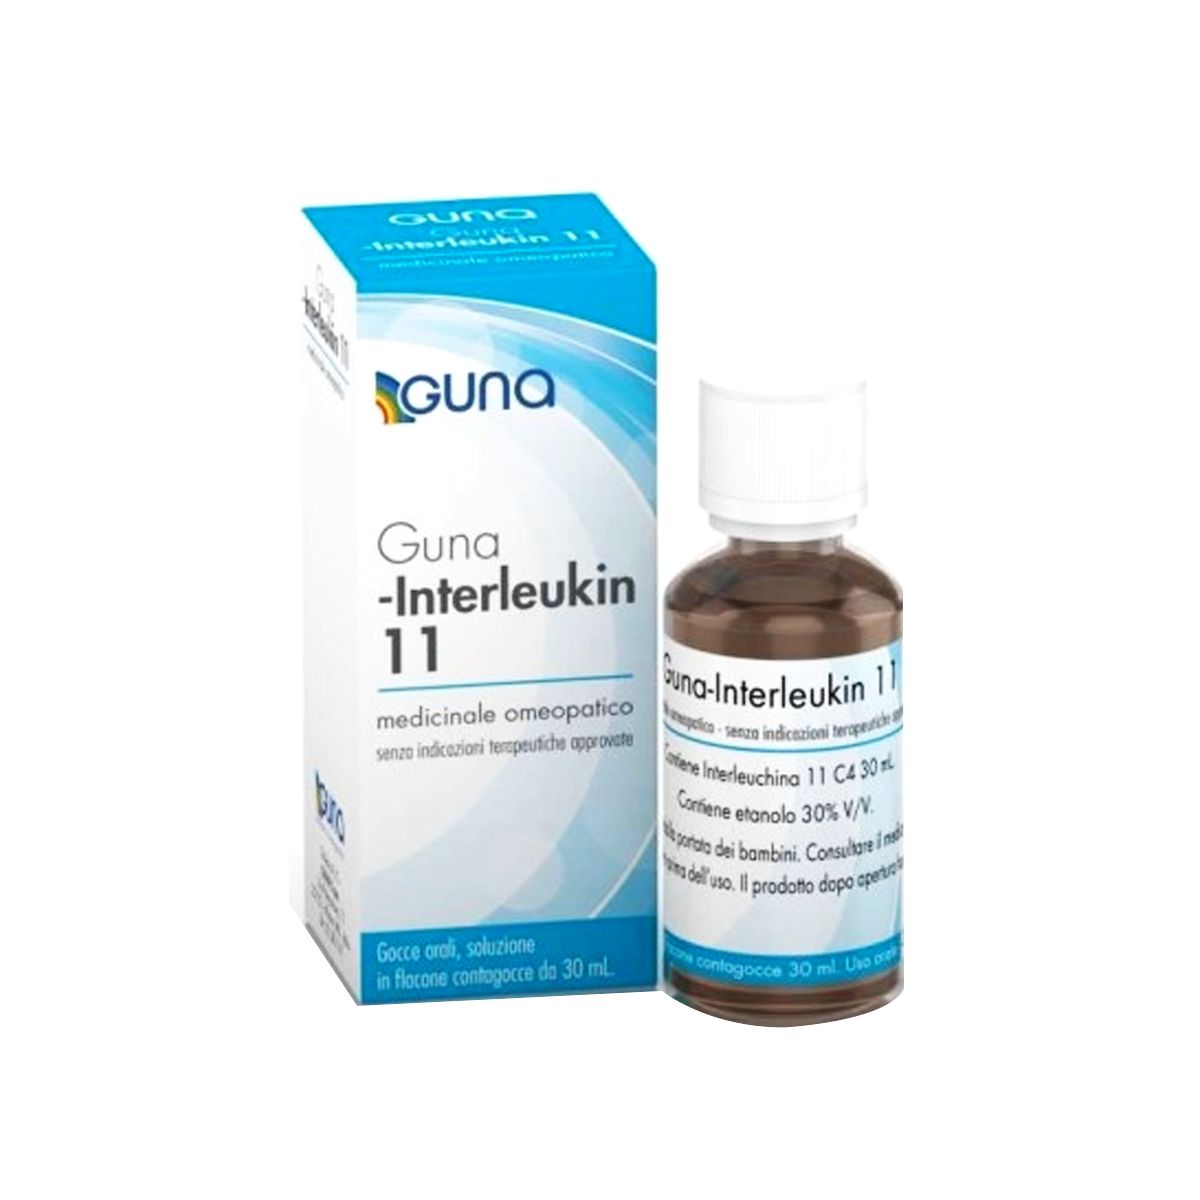 Guna -interleukin 11 Medicinale Omeopatico 30ml